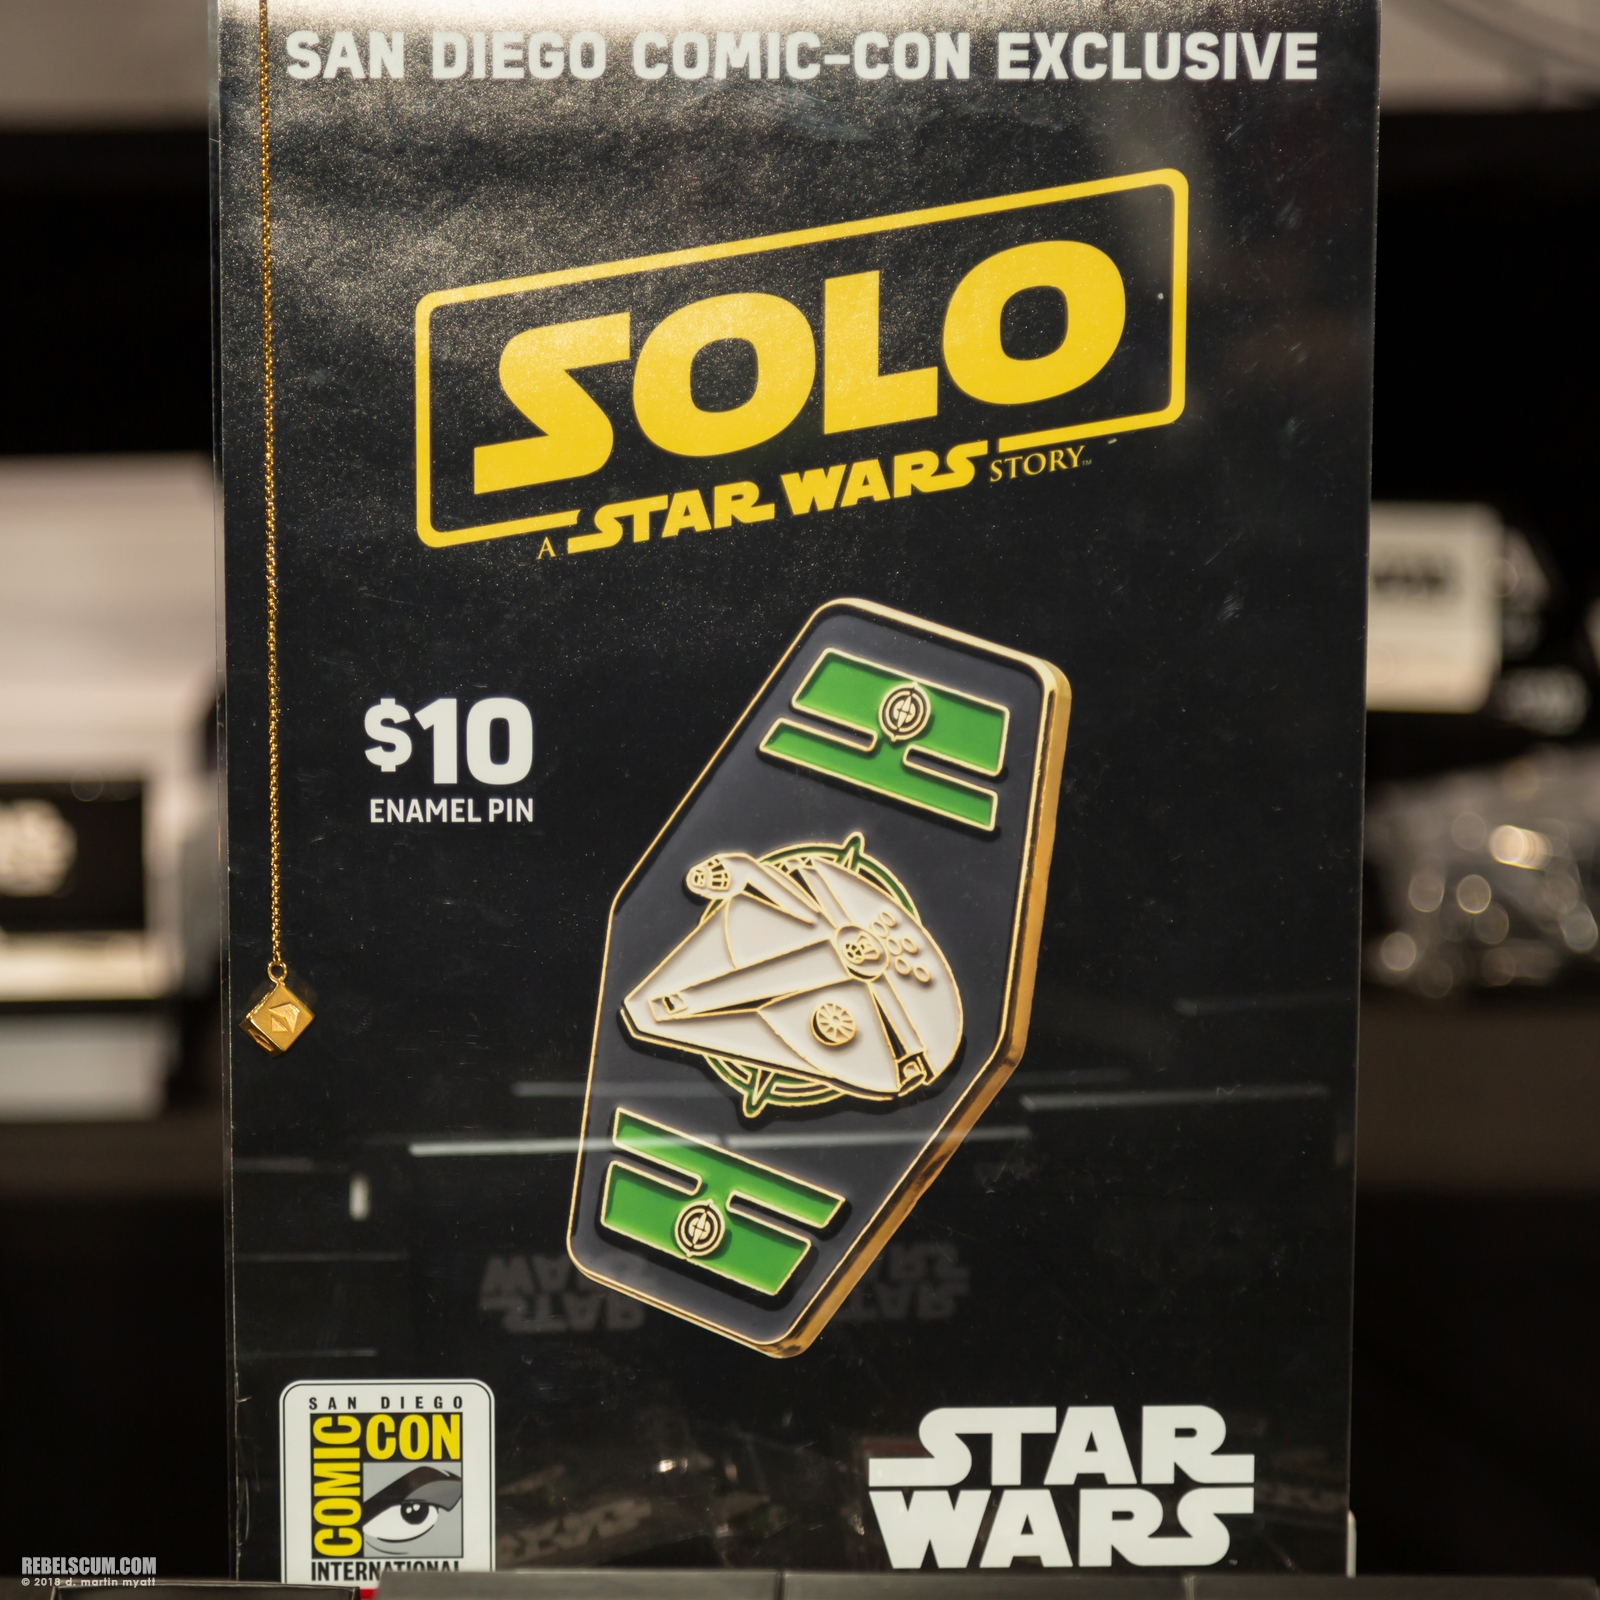 2018-San-Diego-Comic-Con-Lucasfilm-Star-Wars-Pavilion-063.jpg